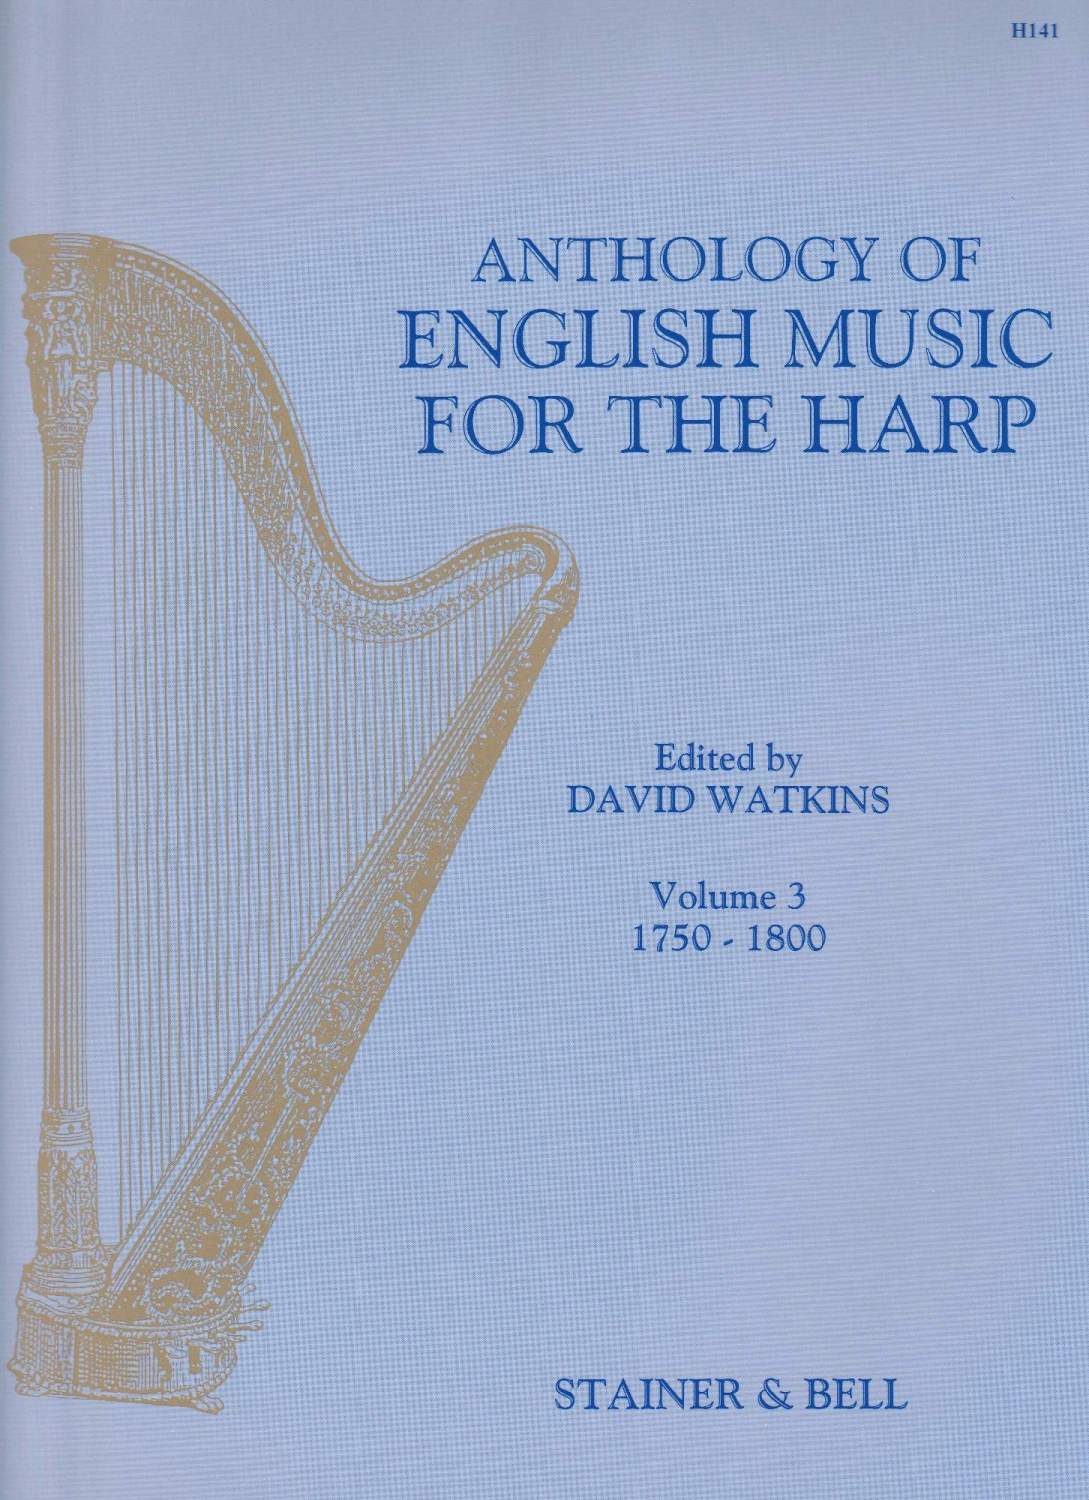 Anthology of English Music for the Harp Volume 3 - Edited by David Watkins